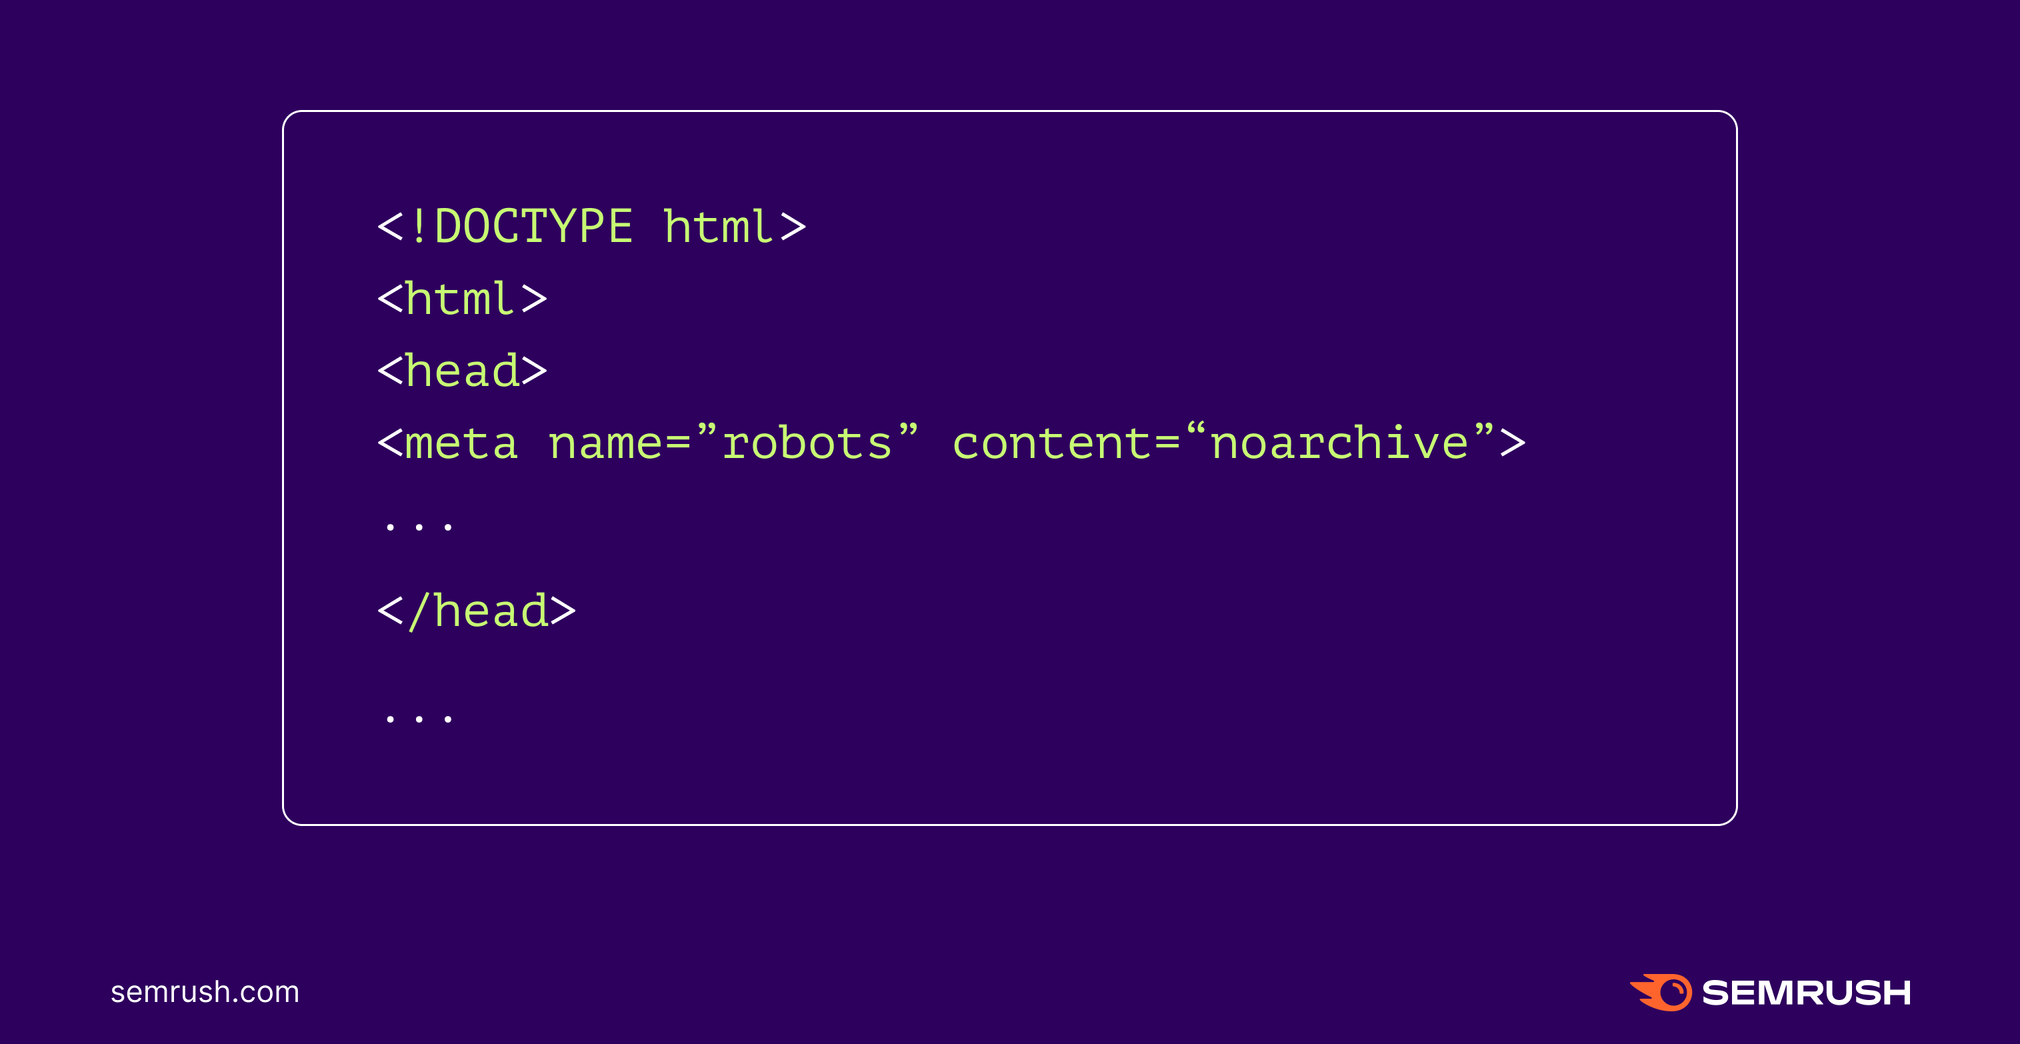 <!DOCTYPE html><html><head><meta name="robots" content="noarchive">...</head>...